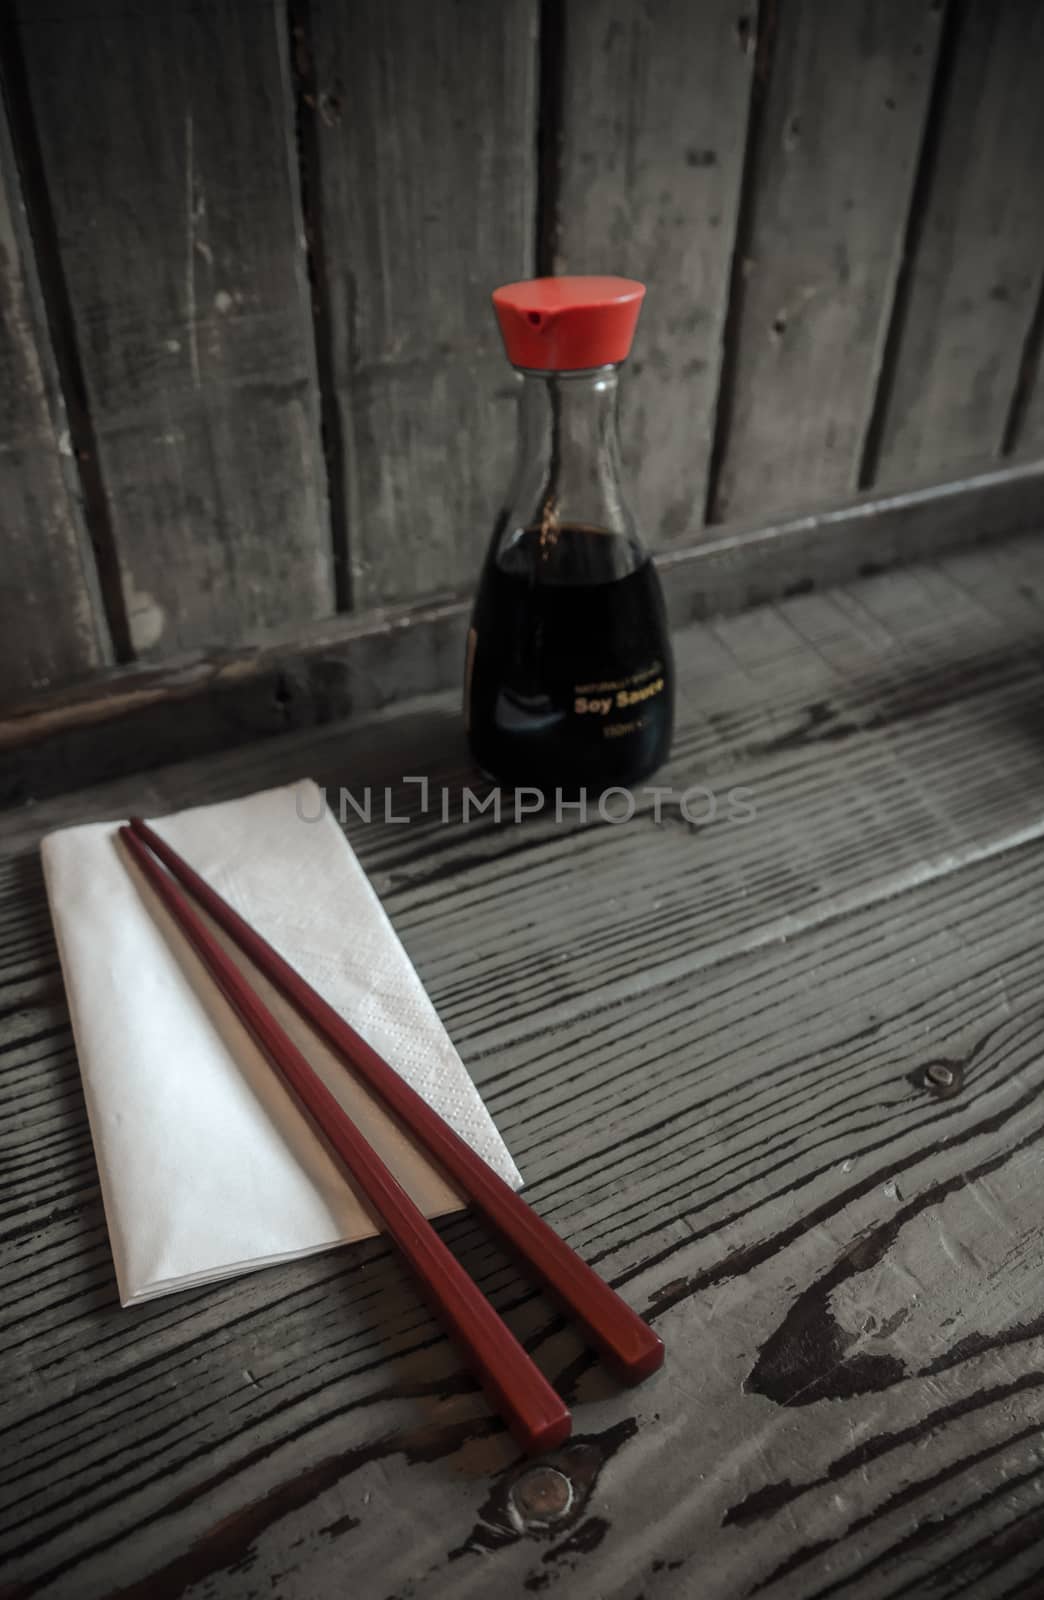 Asian Restaurant With Chopsticks by mrdoomits